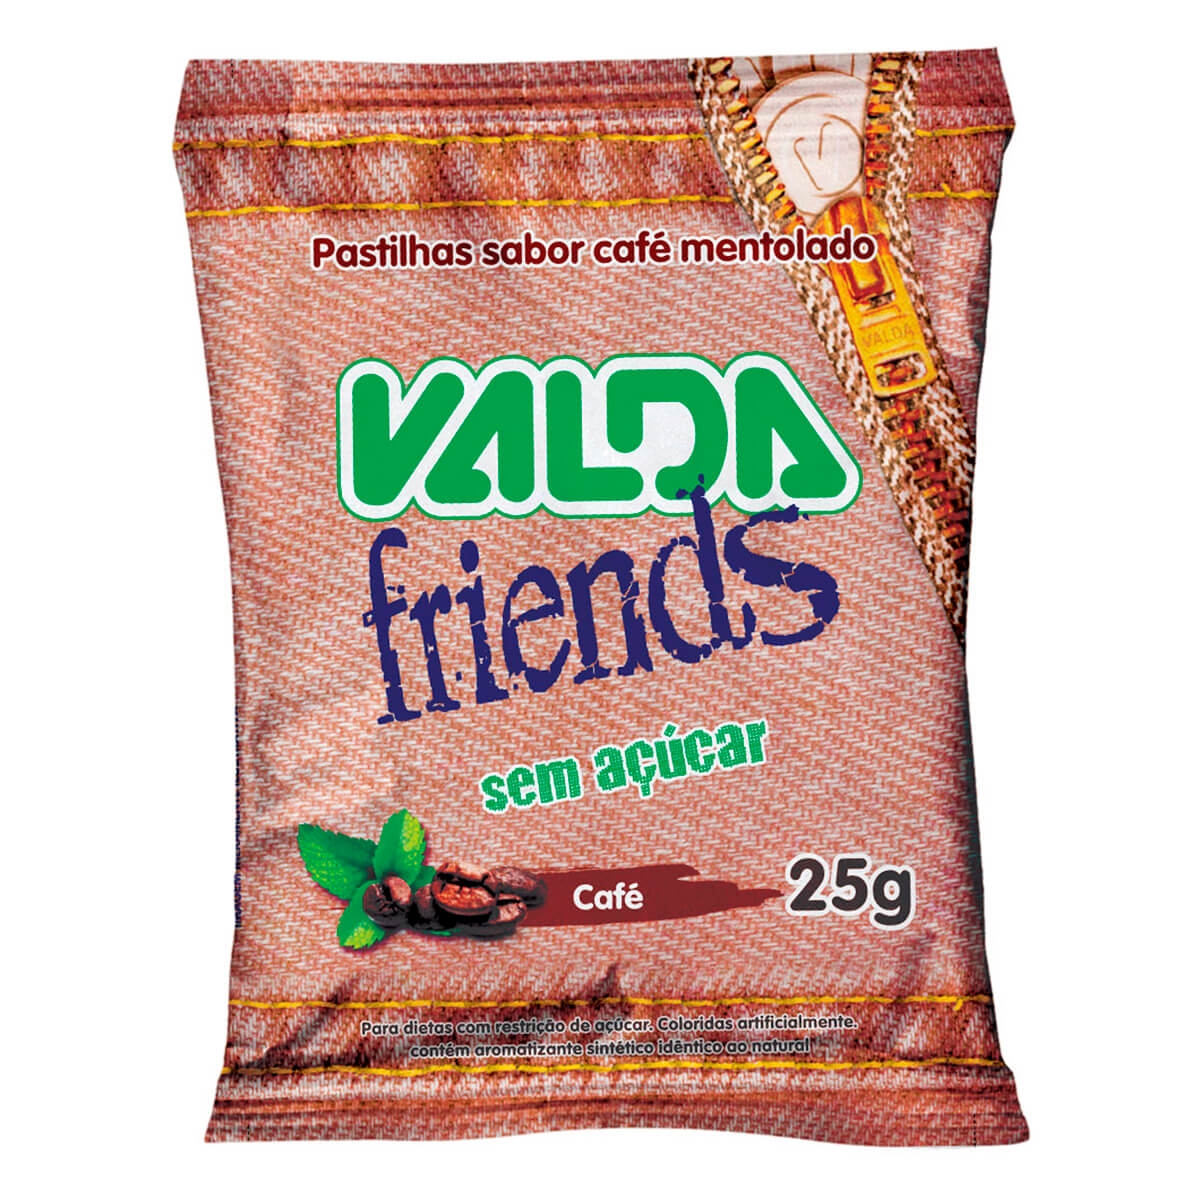 Pastilhas Valda Friends Café Sem Açúcar 25g